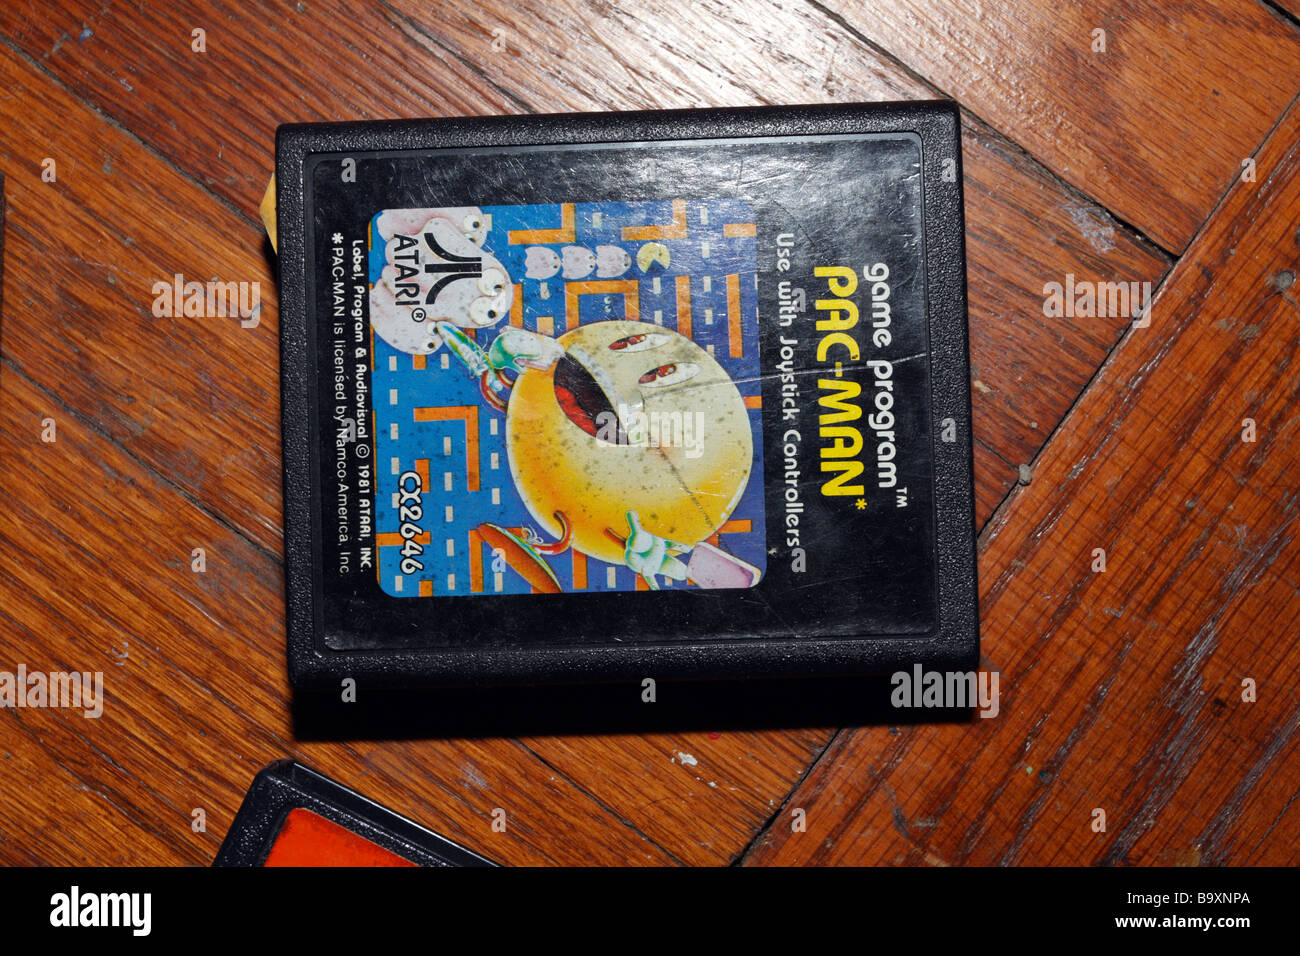 Pacman Pac-man Pac Man video game cartridge for Atari. Stock Photo